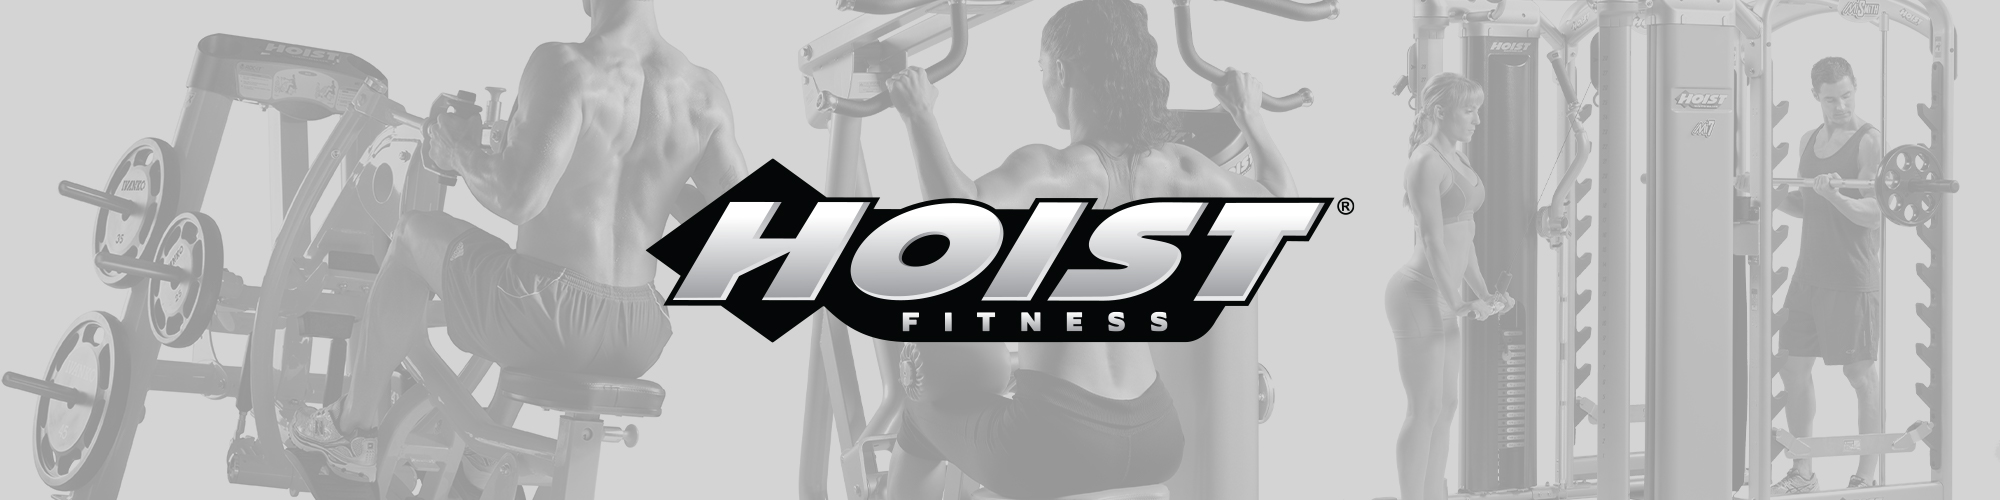 Hoist Fitness Commercial Grade Mi5 Functional Trainer Gym - Fitness Market